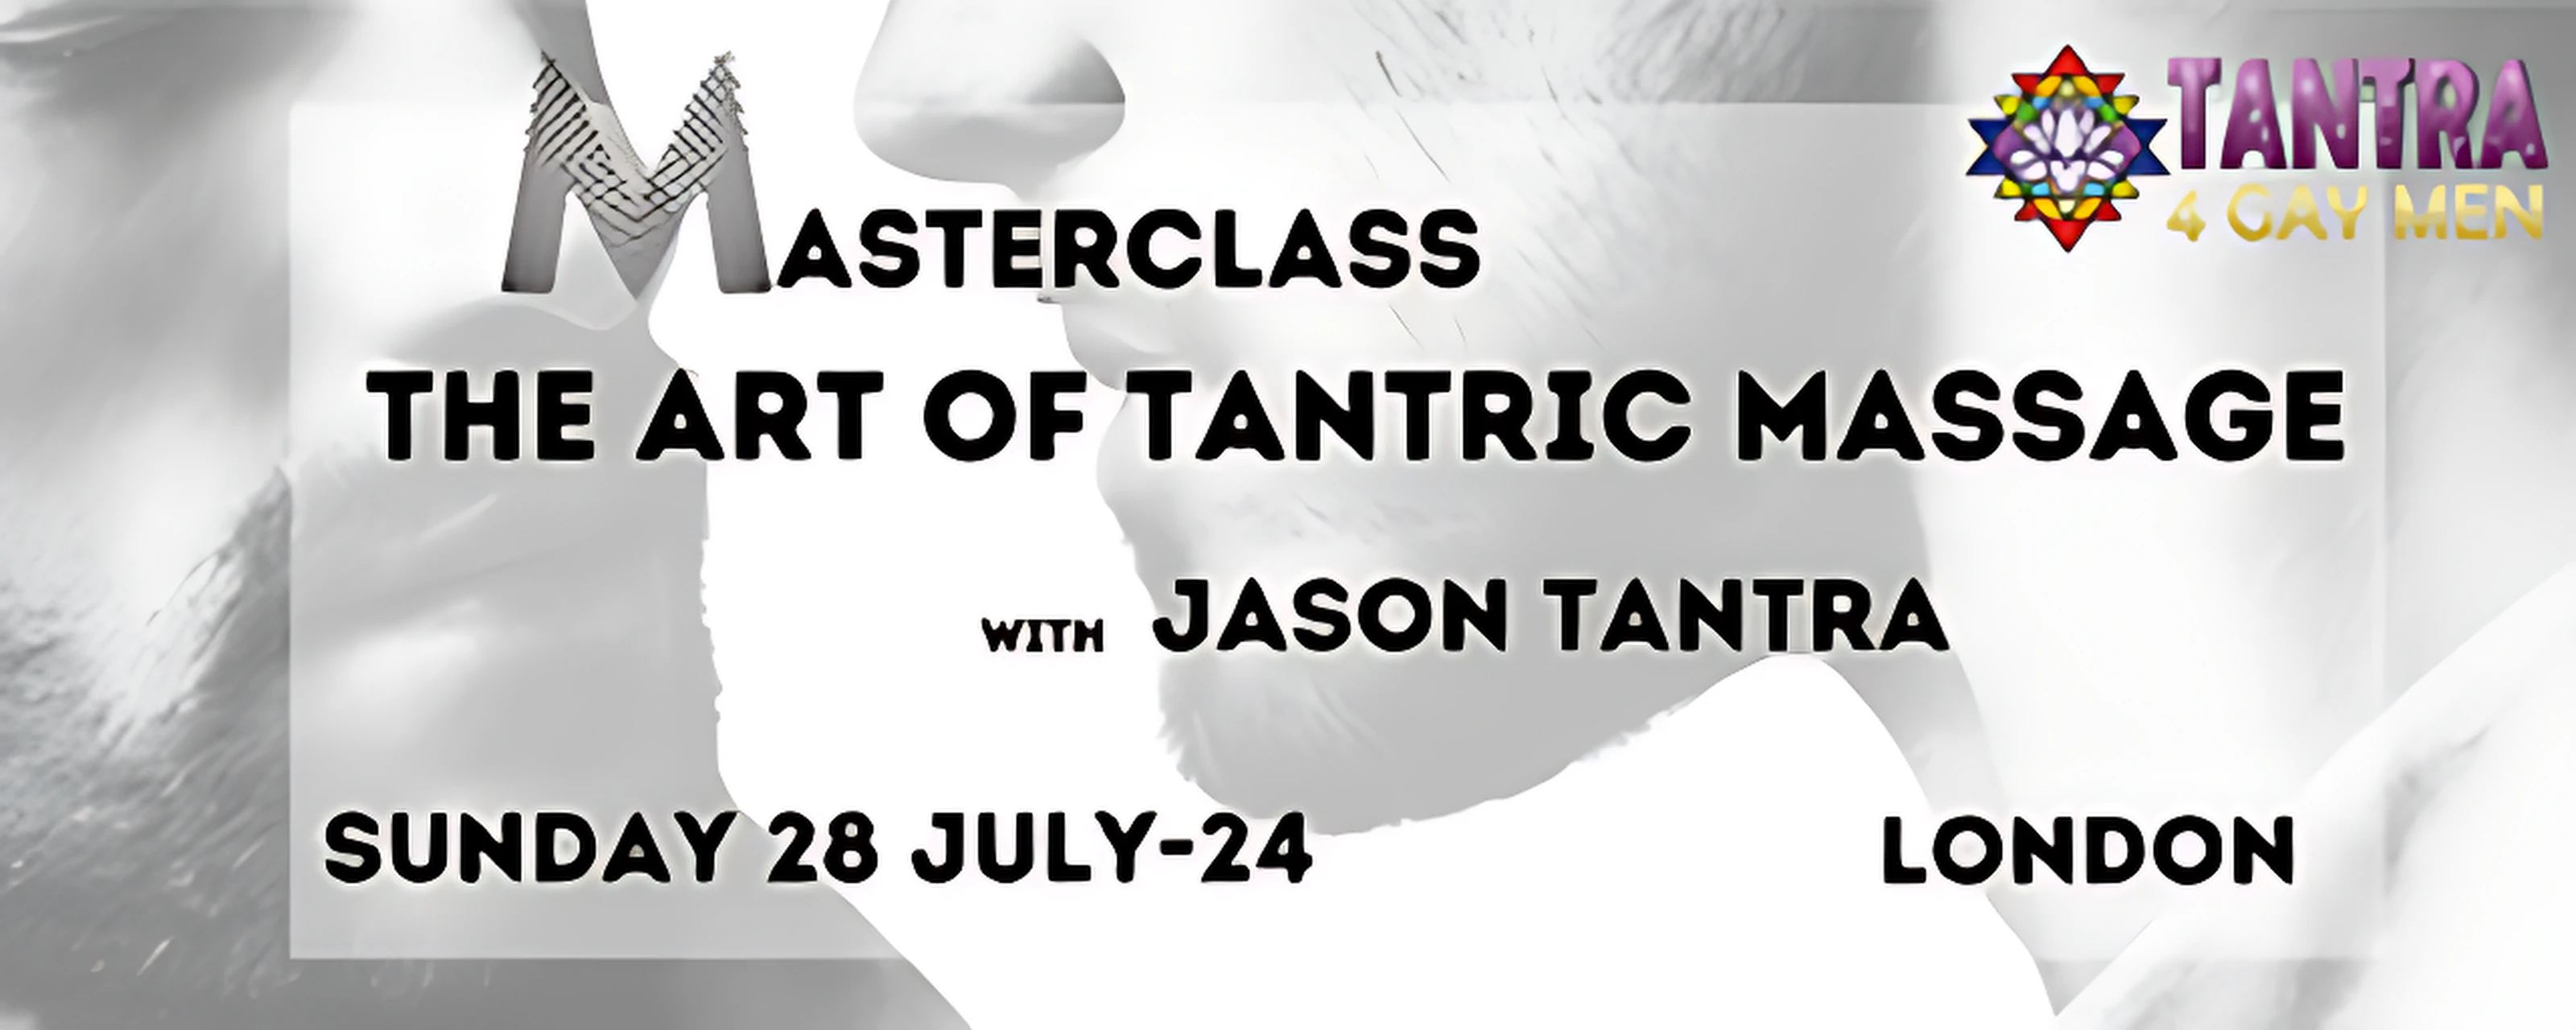 1-daagse Masterclass: Kunst van tantrische massage